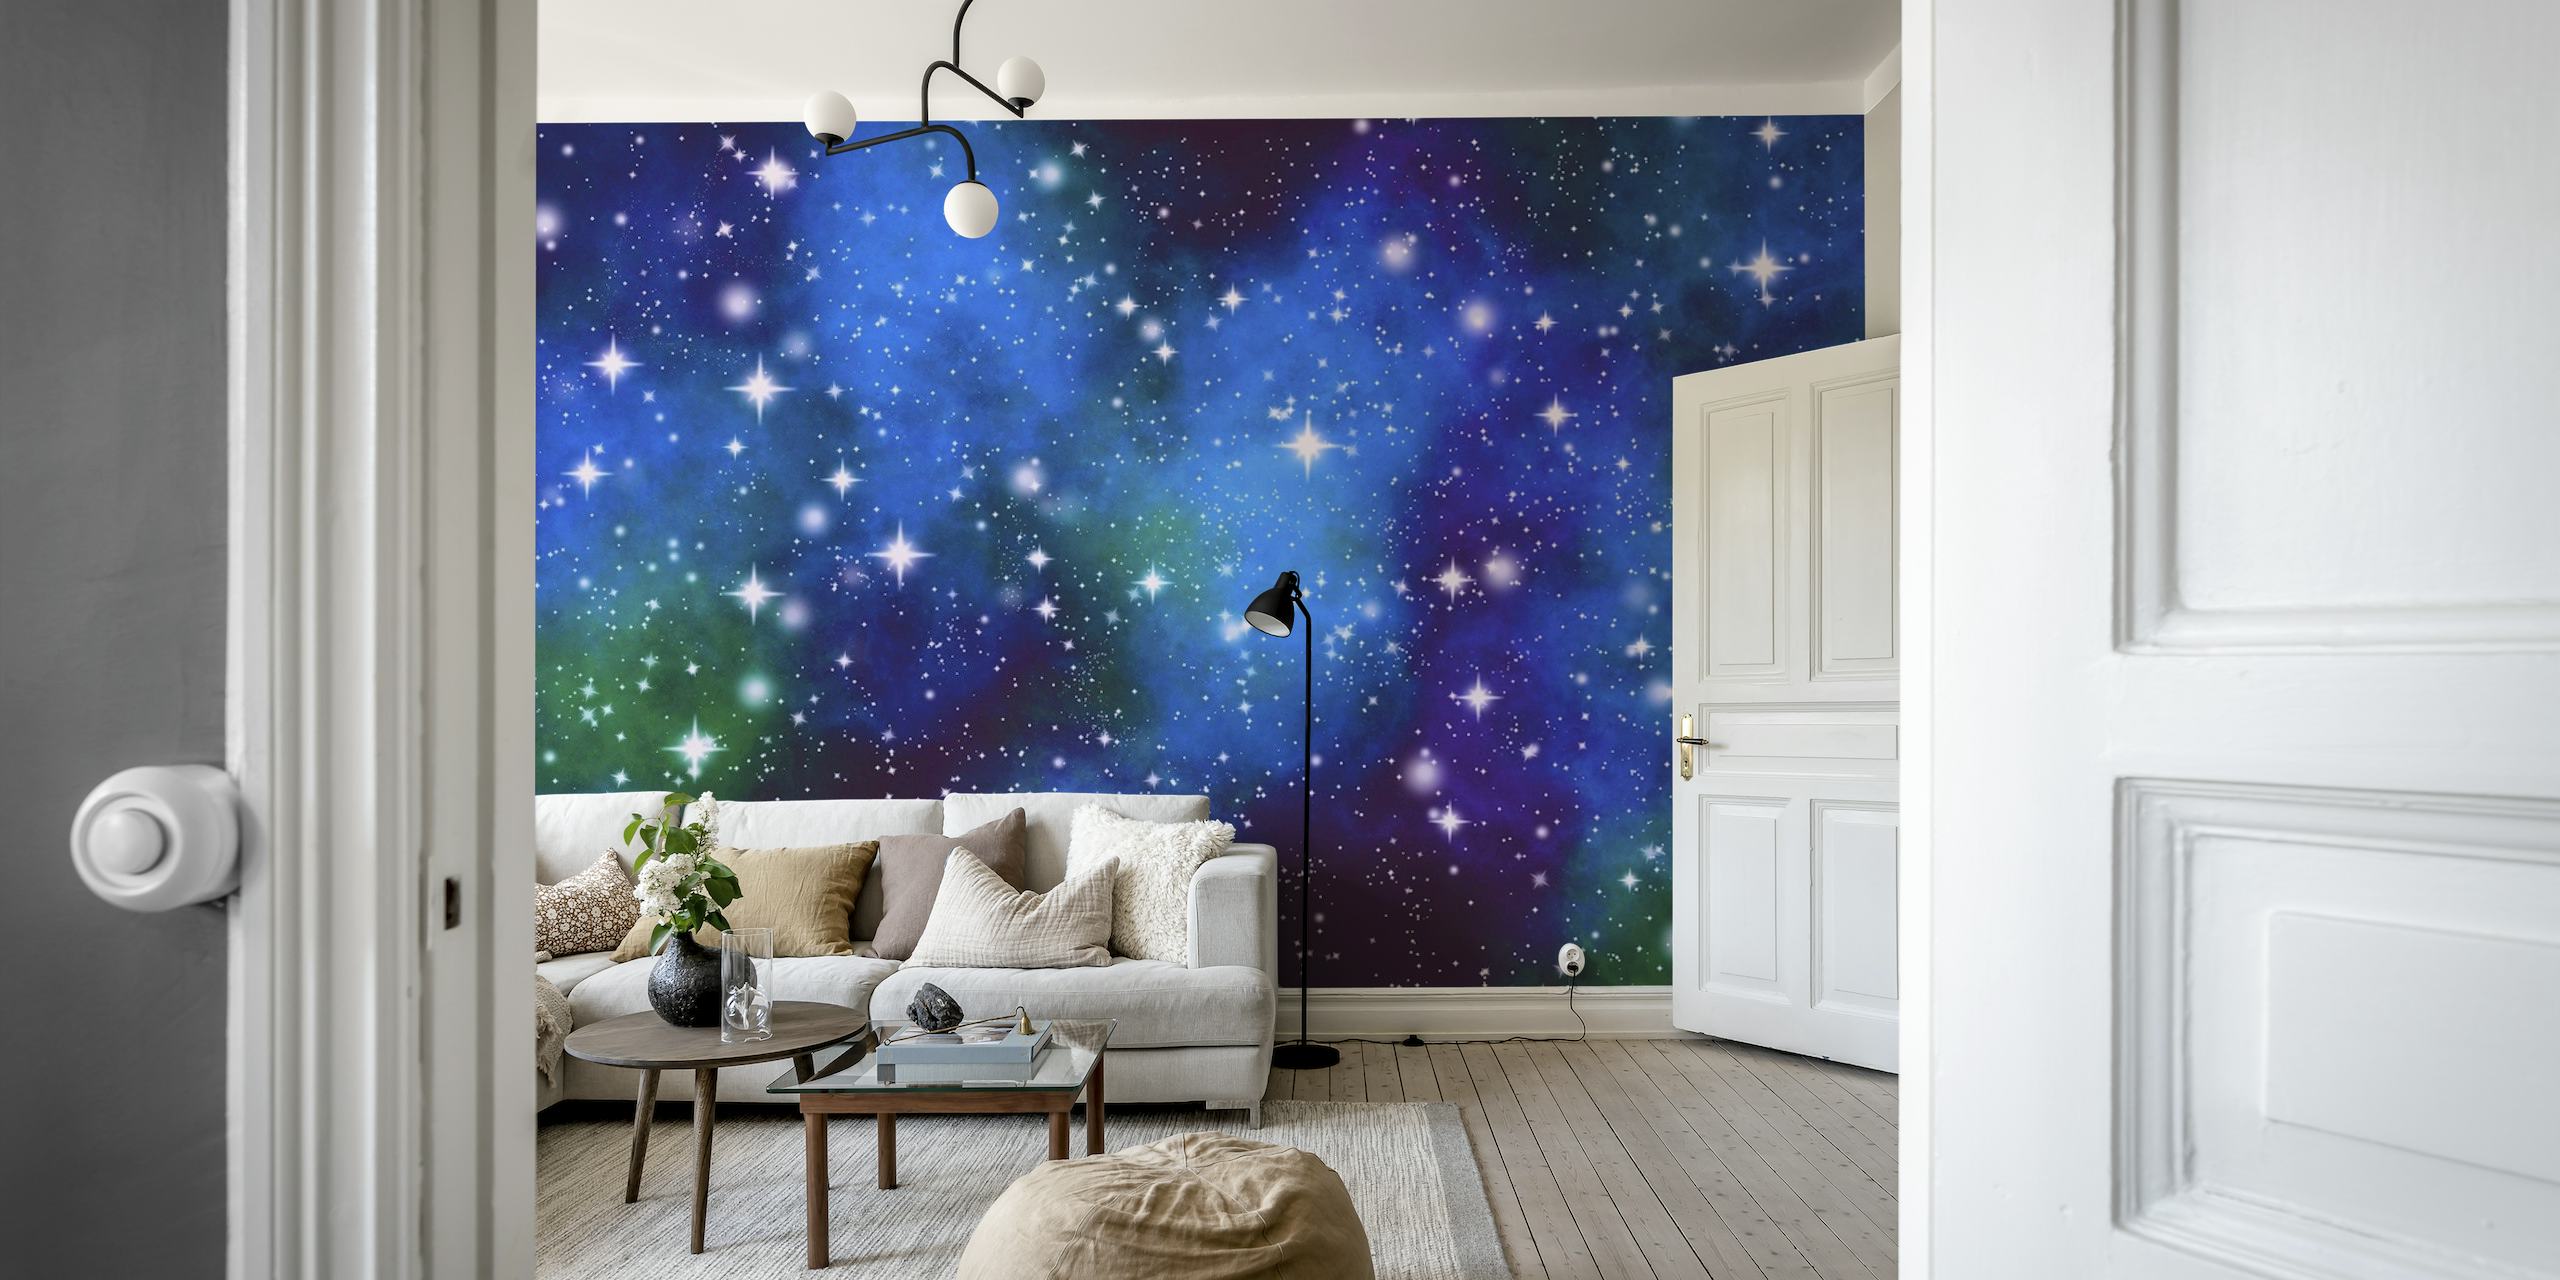 Galaxy 6 wallpaper